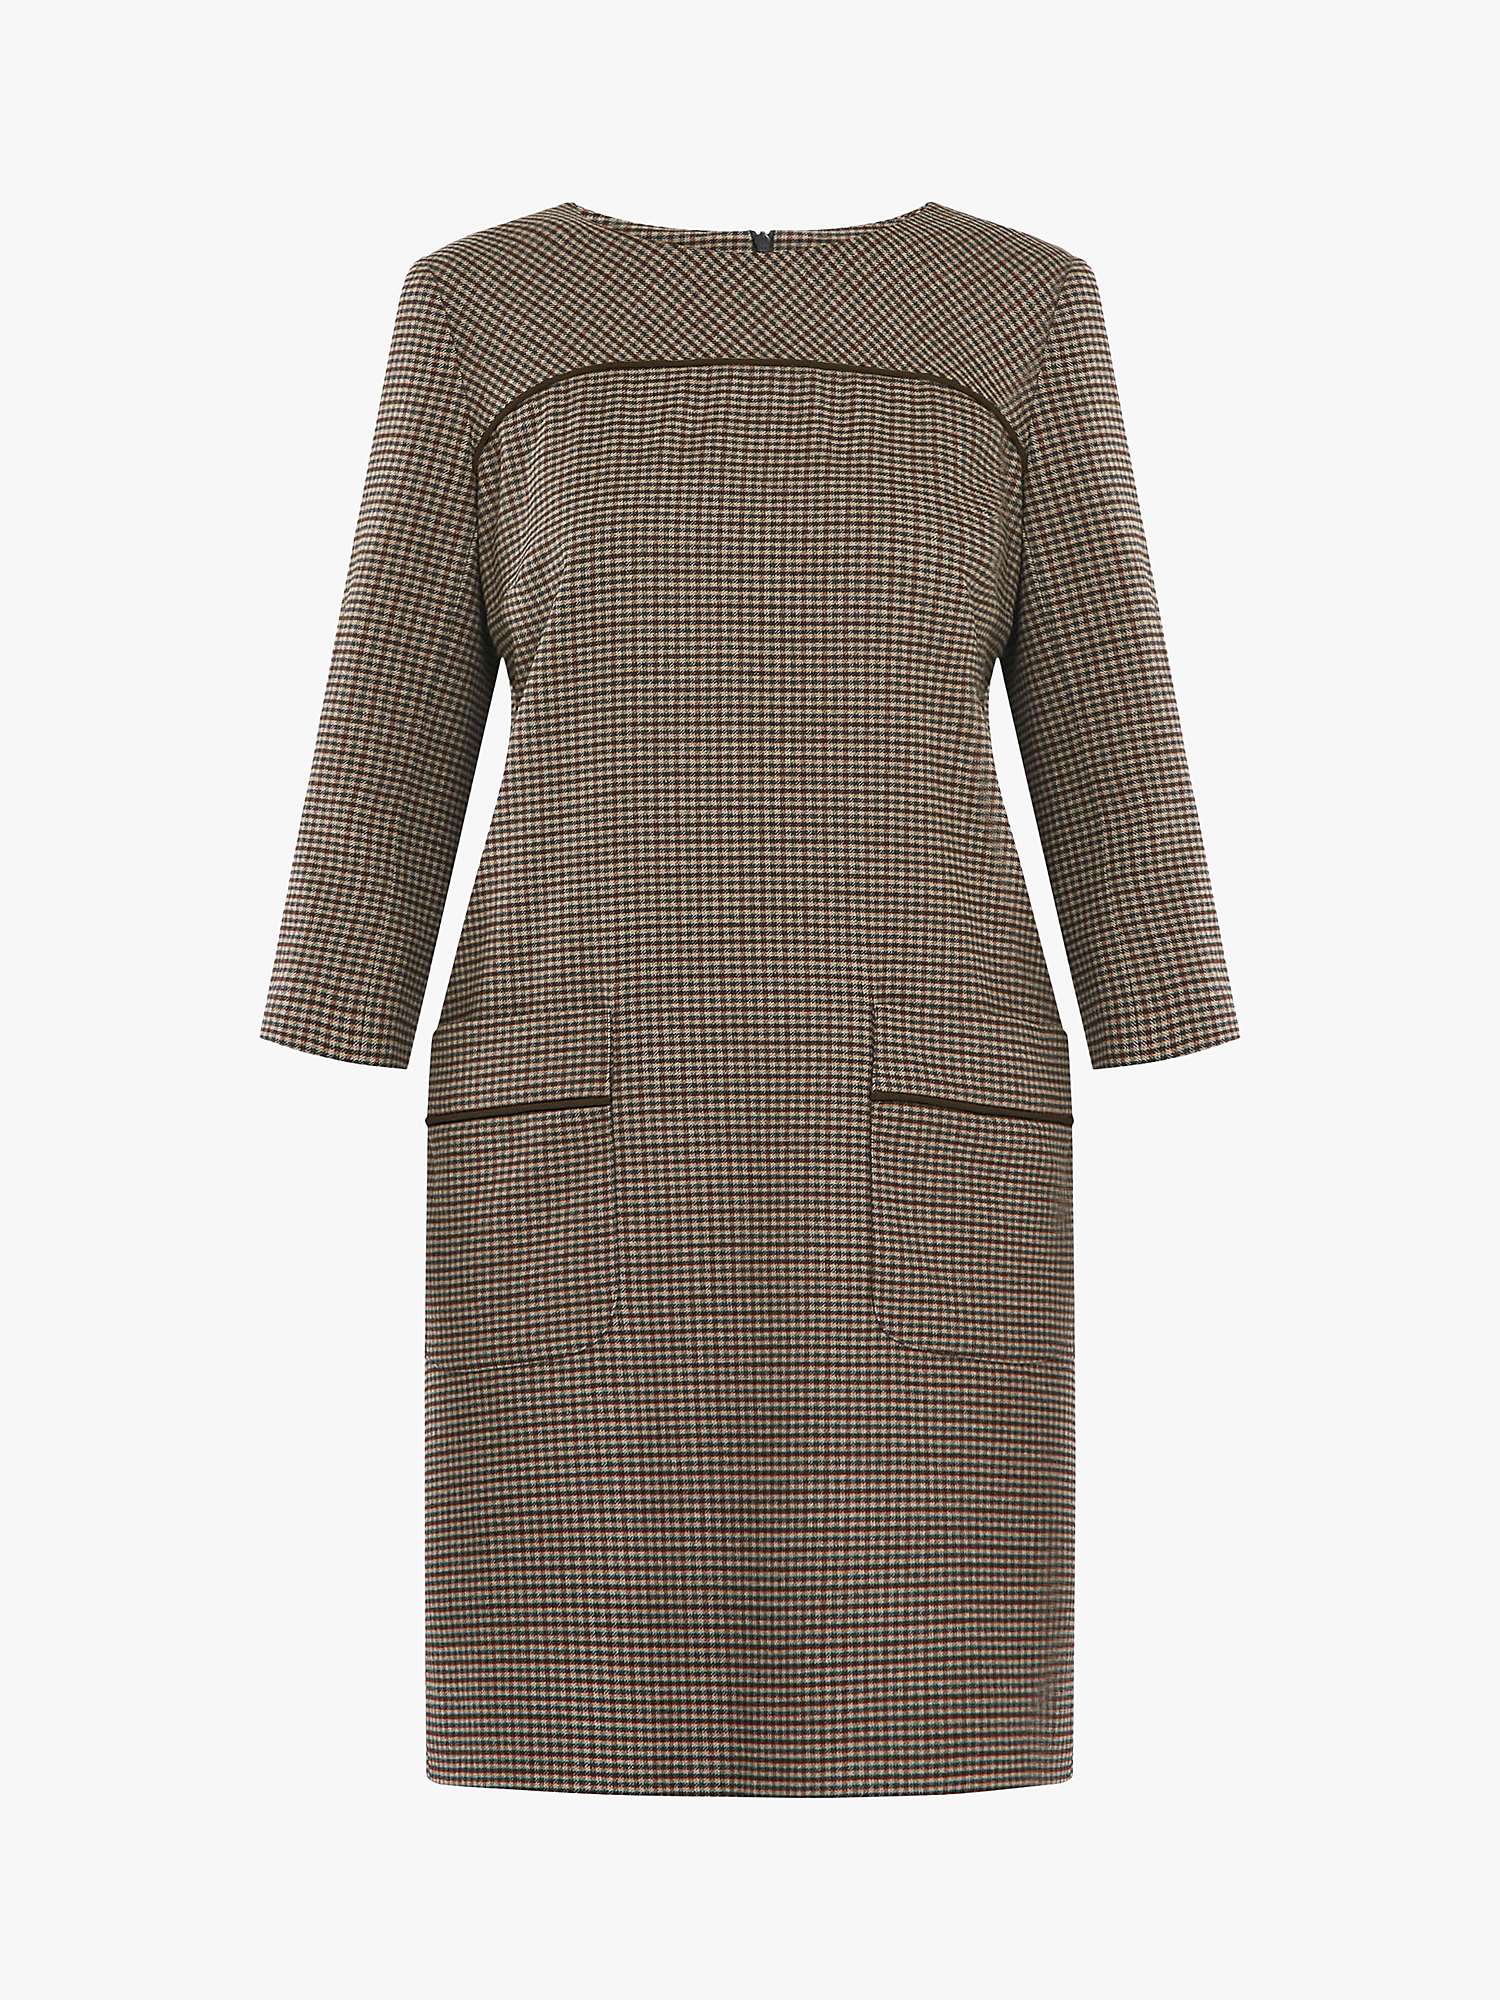 Buy Helen McAlinden Cilla Micro Check Shift Dress, Brown/Multi Online at johnlewis.com